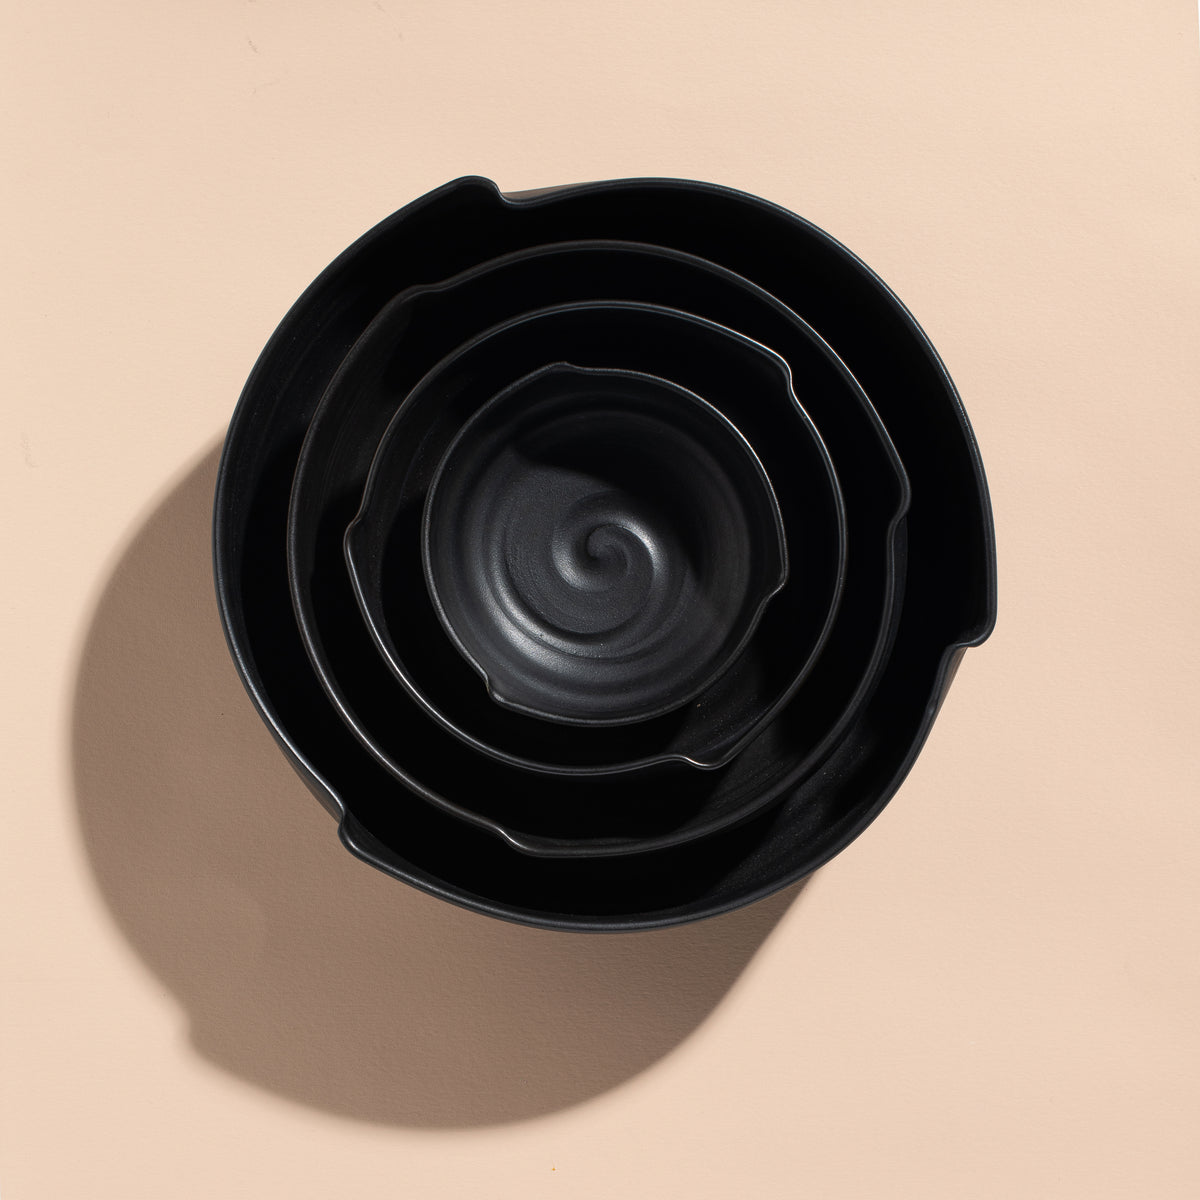 Medium Bowl (black)